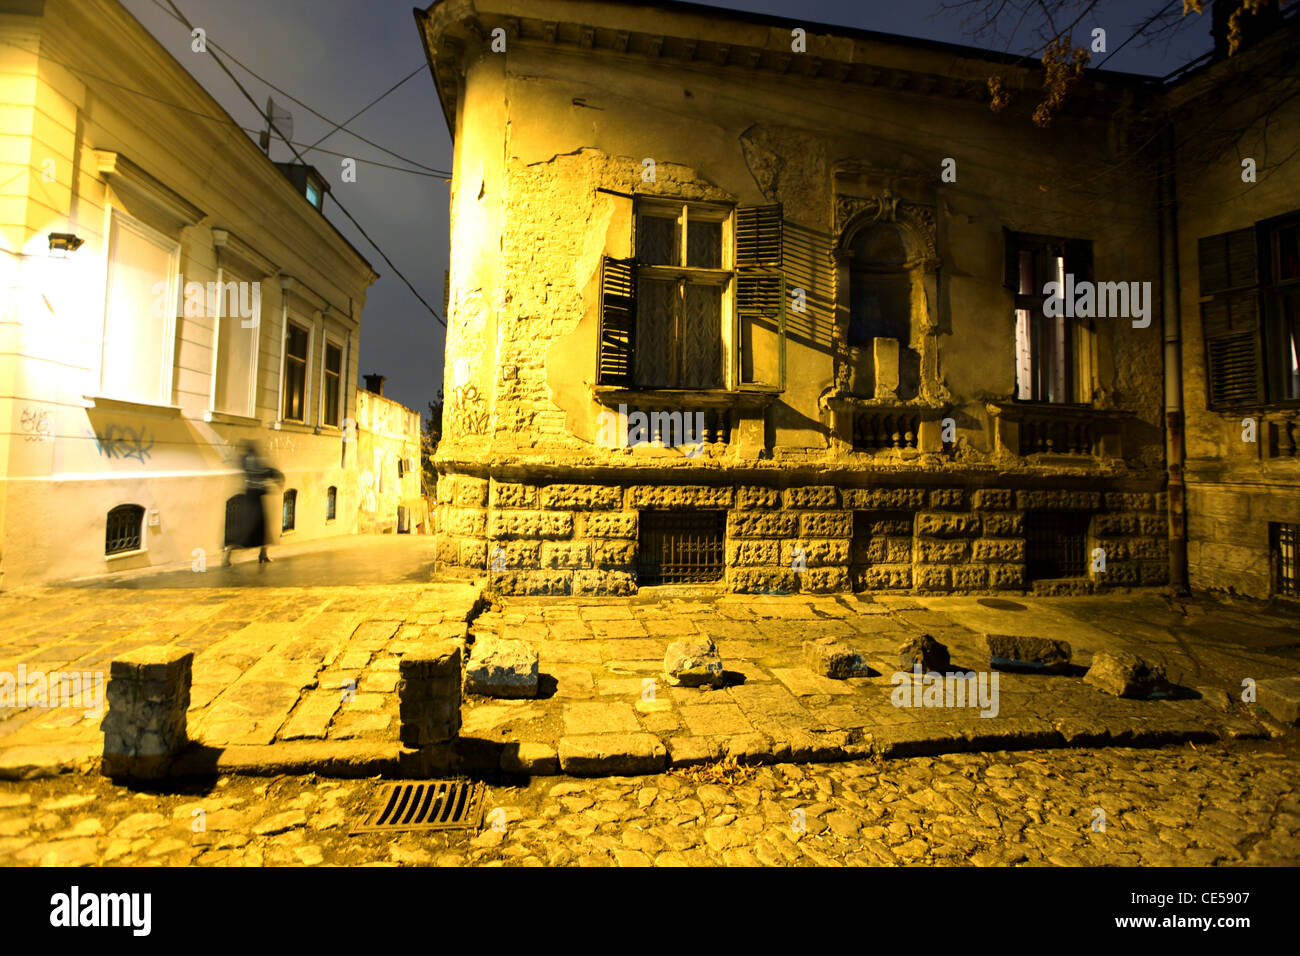 Illuminated old house at night in an old quarter of Kosancicev venac, city of Belgrade, Serbia, Balkans Stock Photo